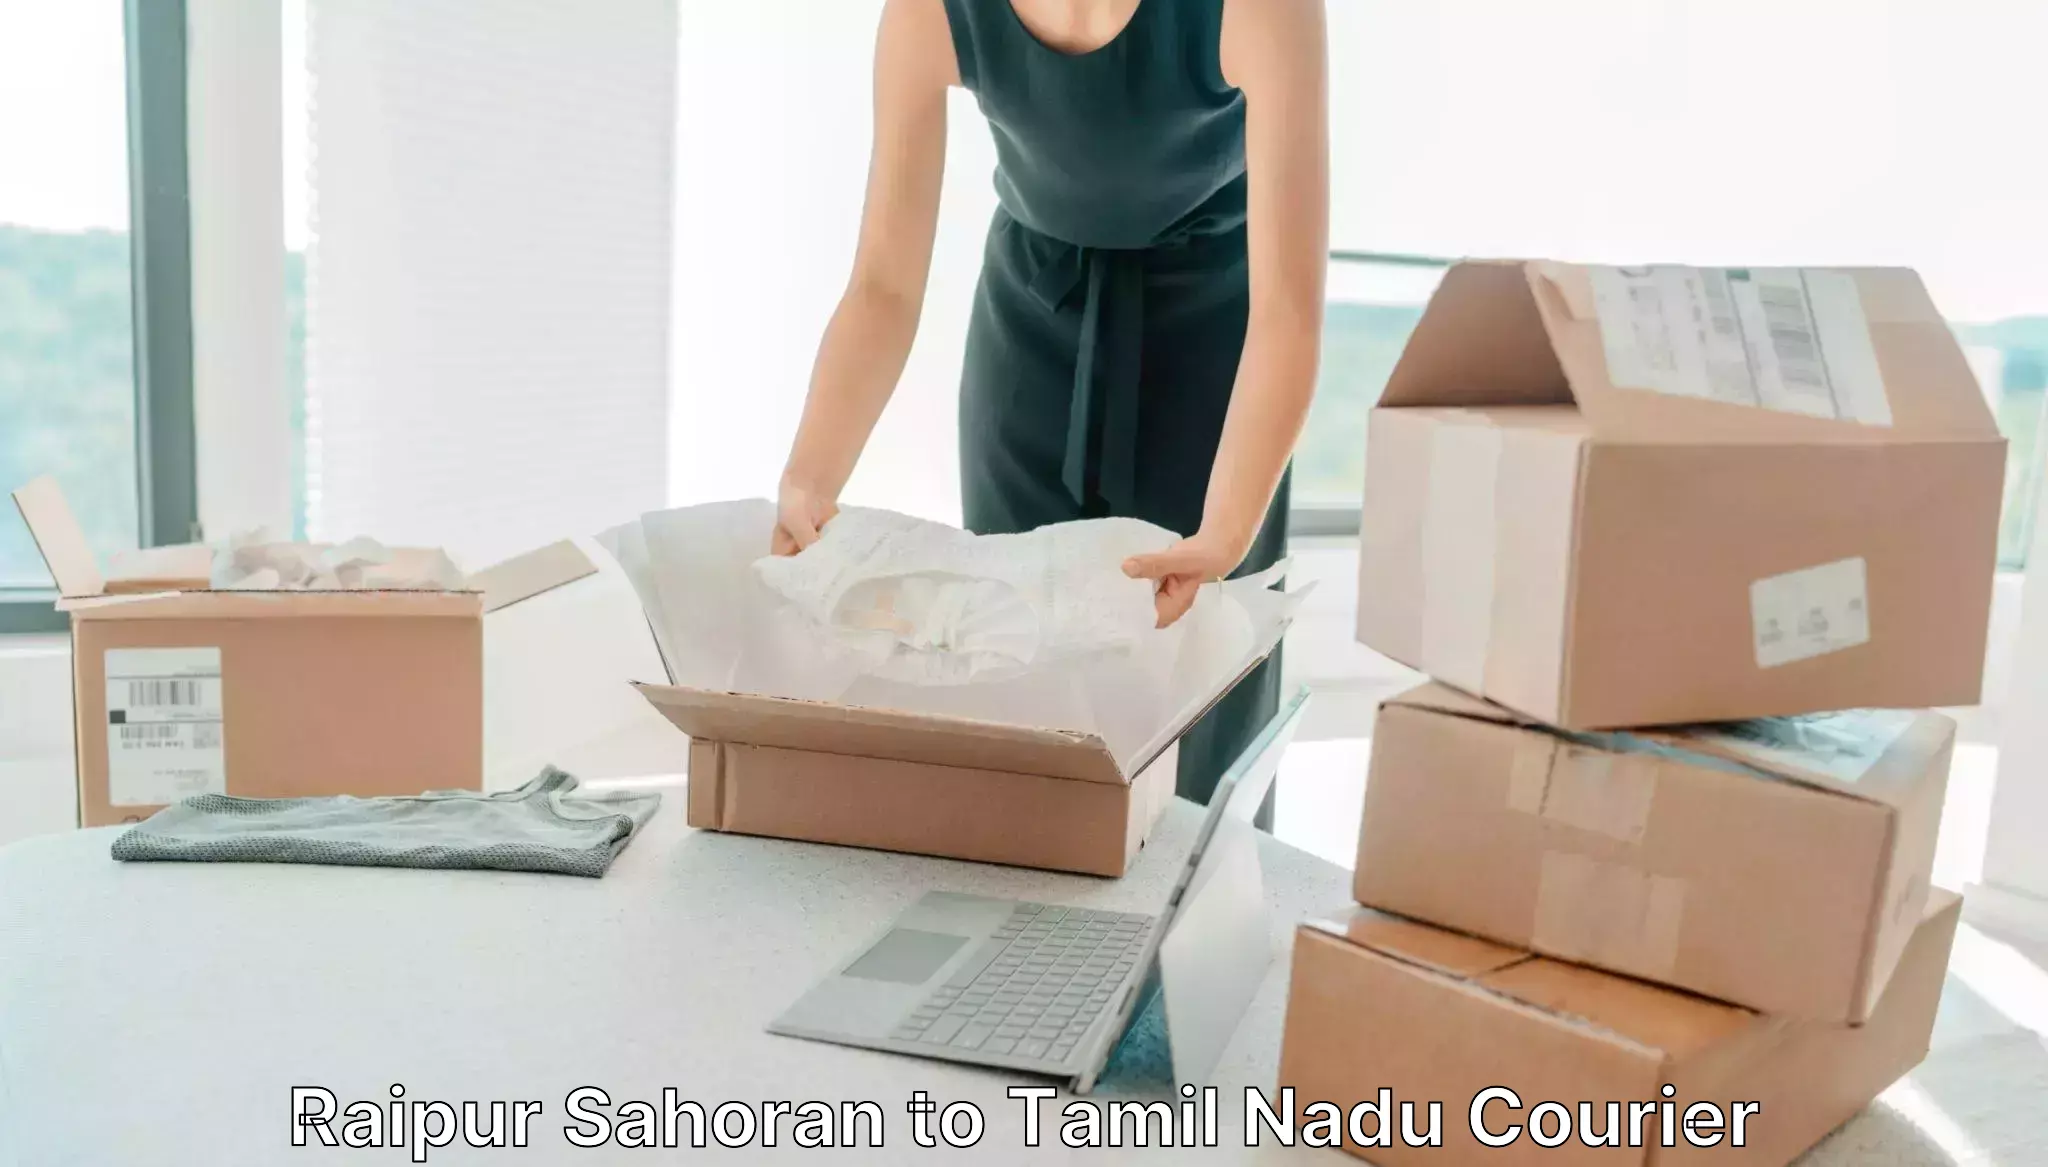 Courier service innovation in Raipur Sahoran to Tirukalukundram